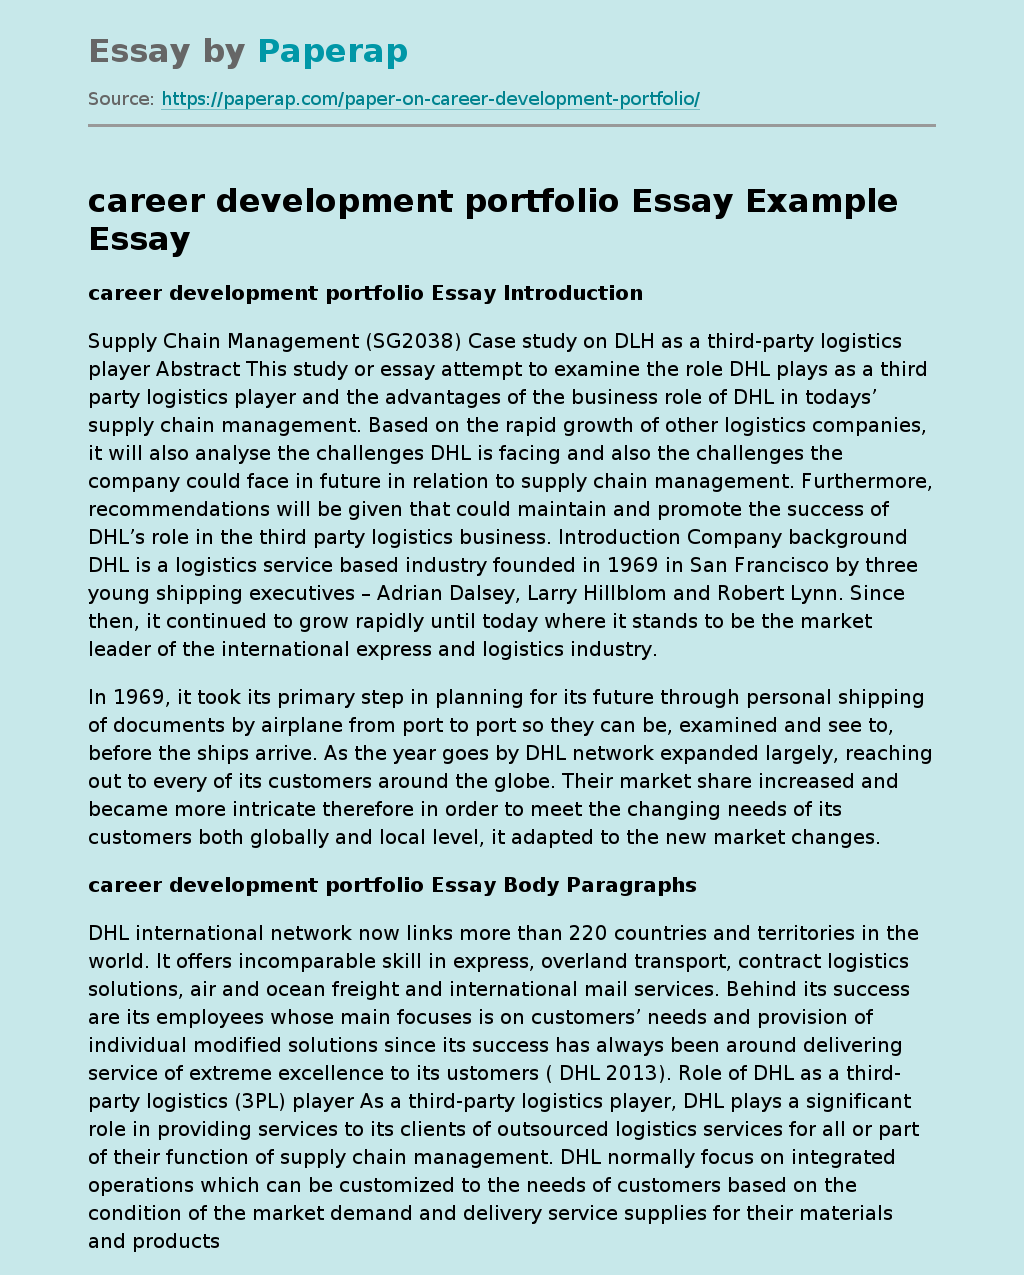 Career Development Portfolio Essay Example